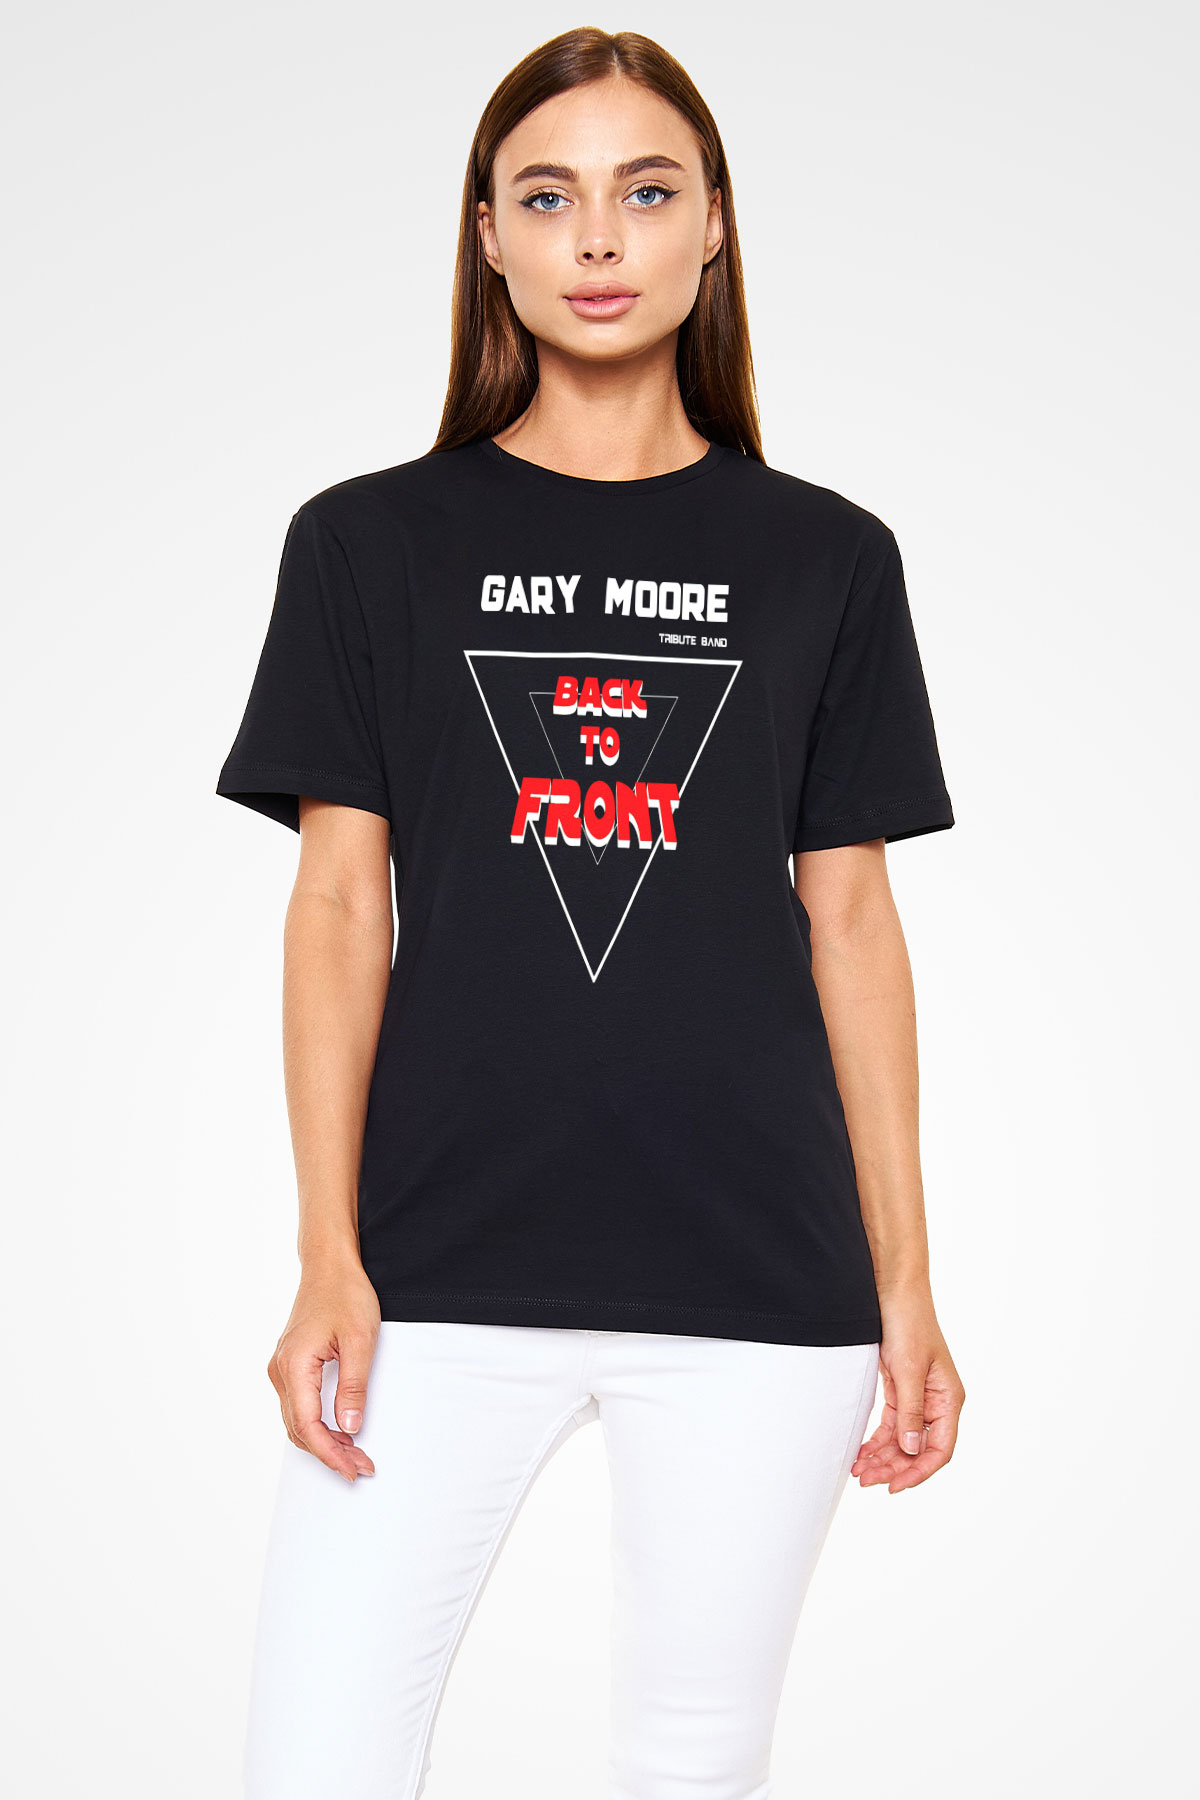 Gary Moore Black Unisex T-Shirt - Tees - Shirts